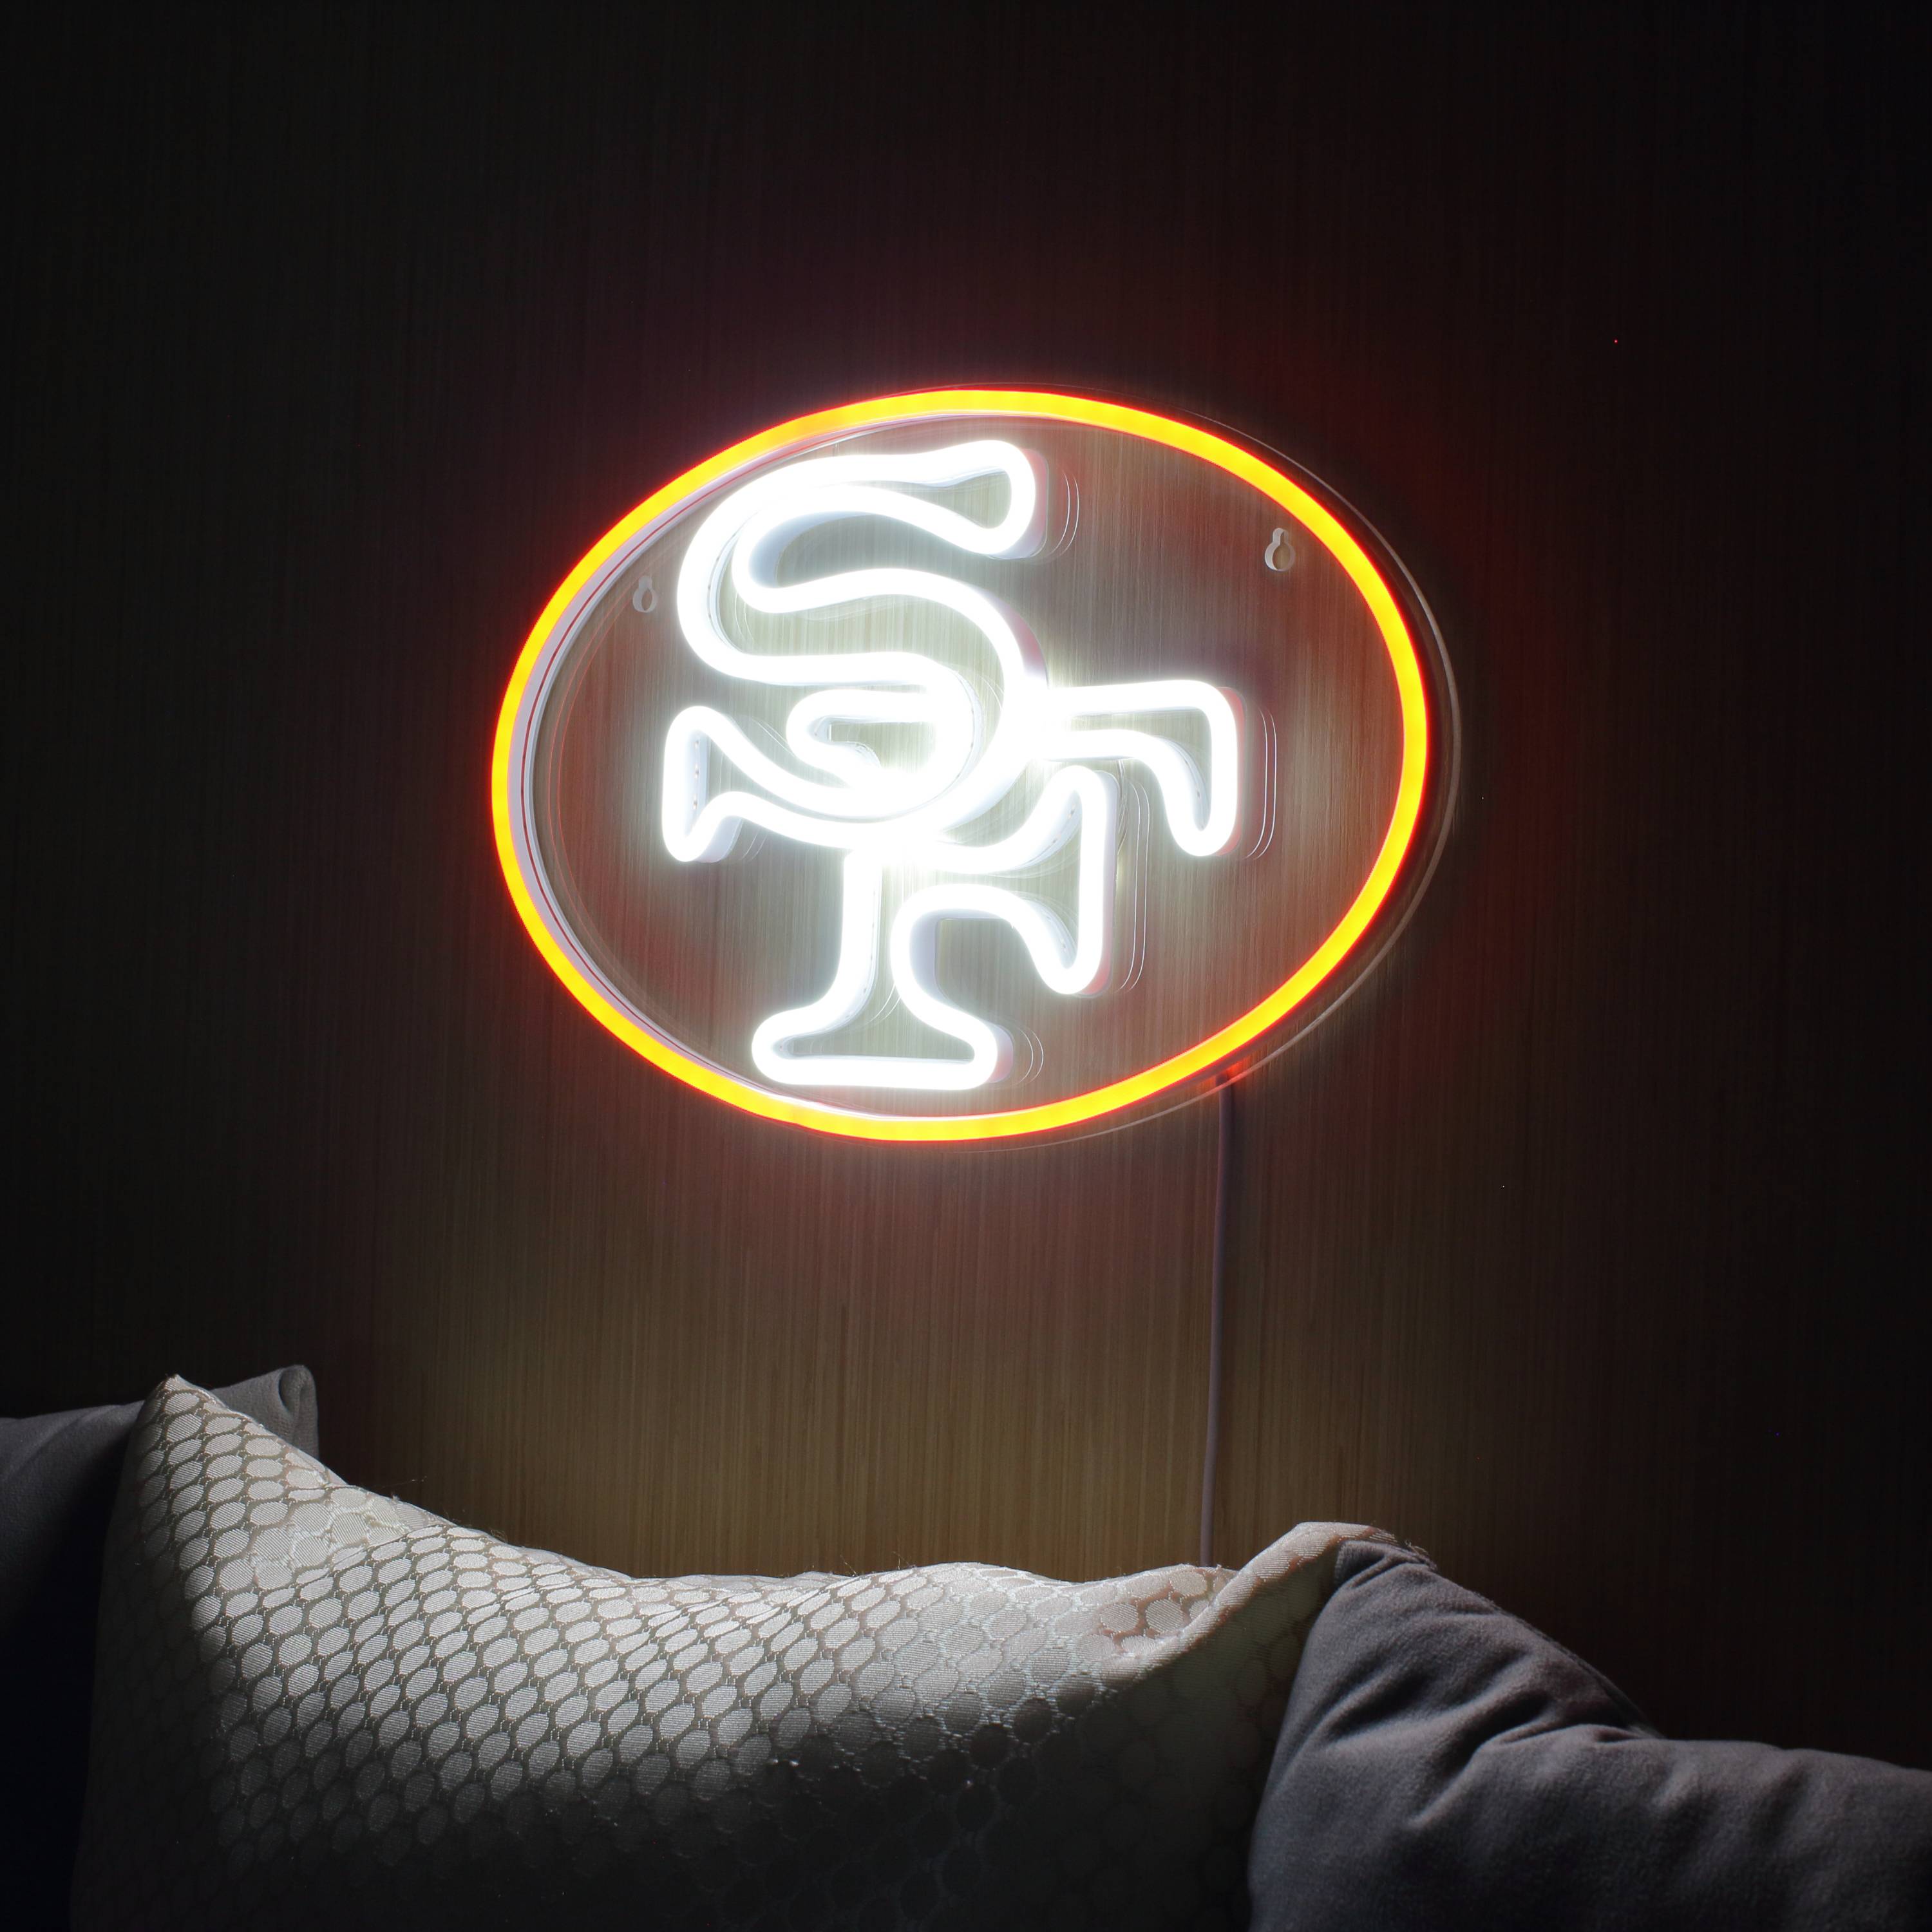 San Francisco 49ers Neon-Like Flex LED Sign